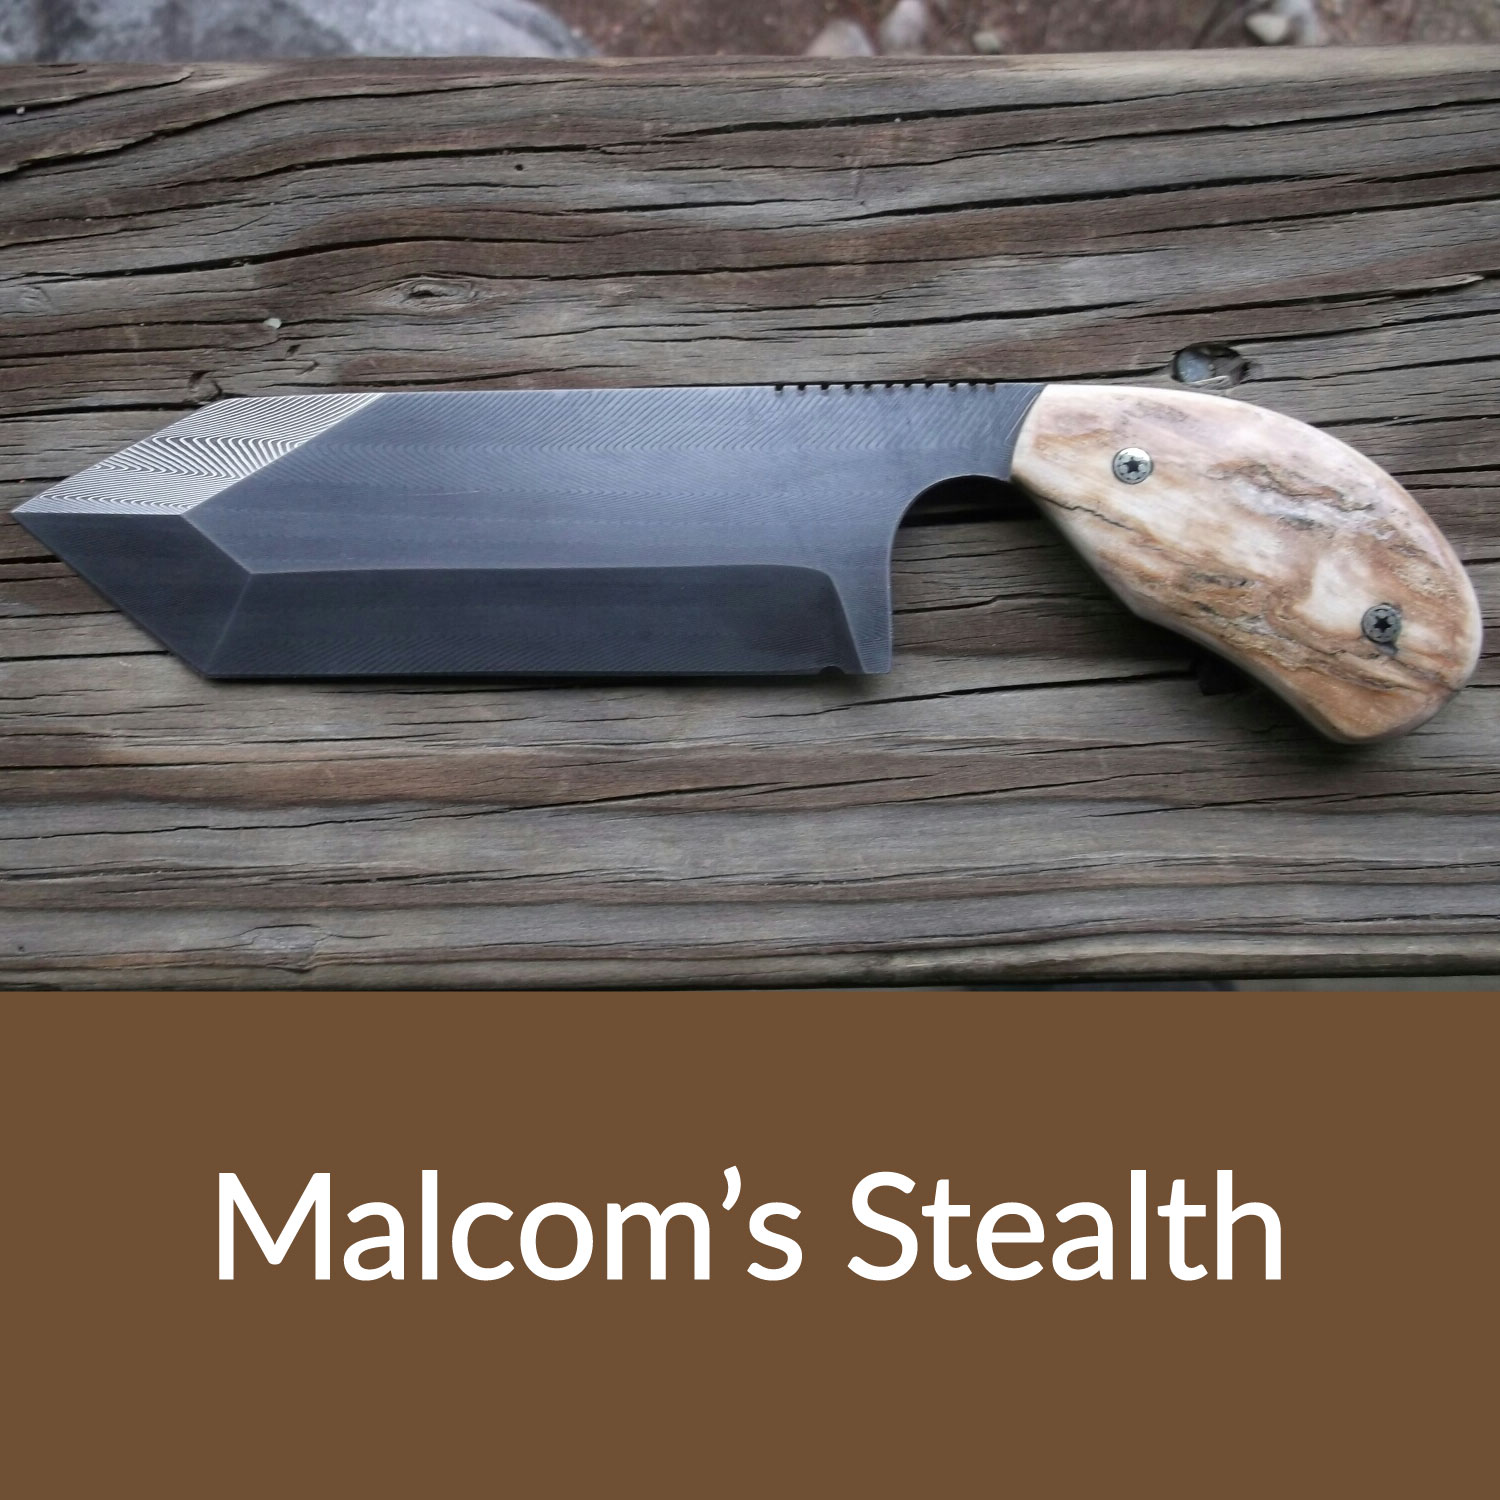 Malcom's Stealth